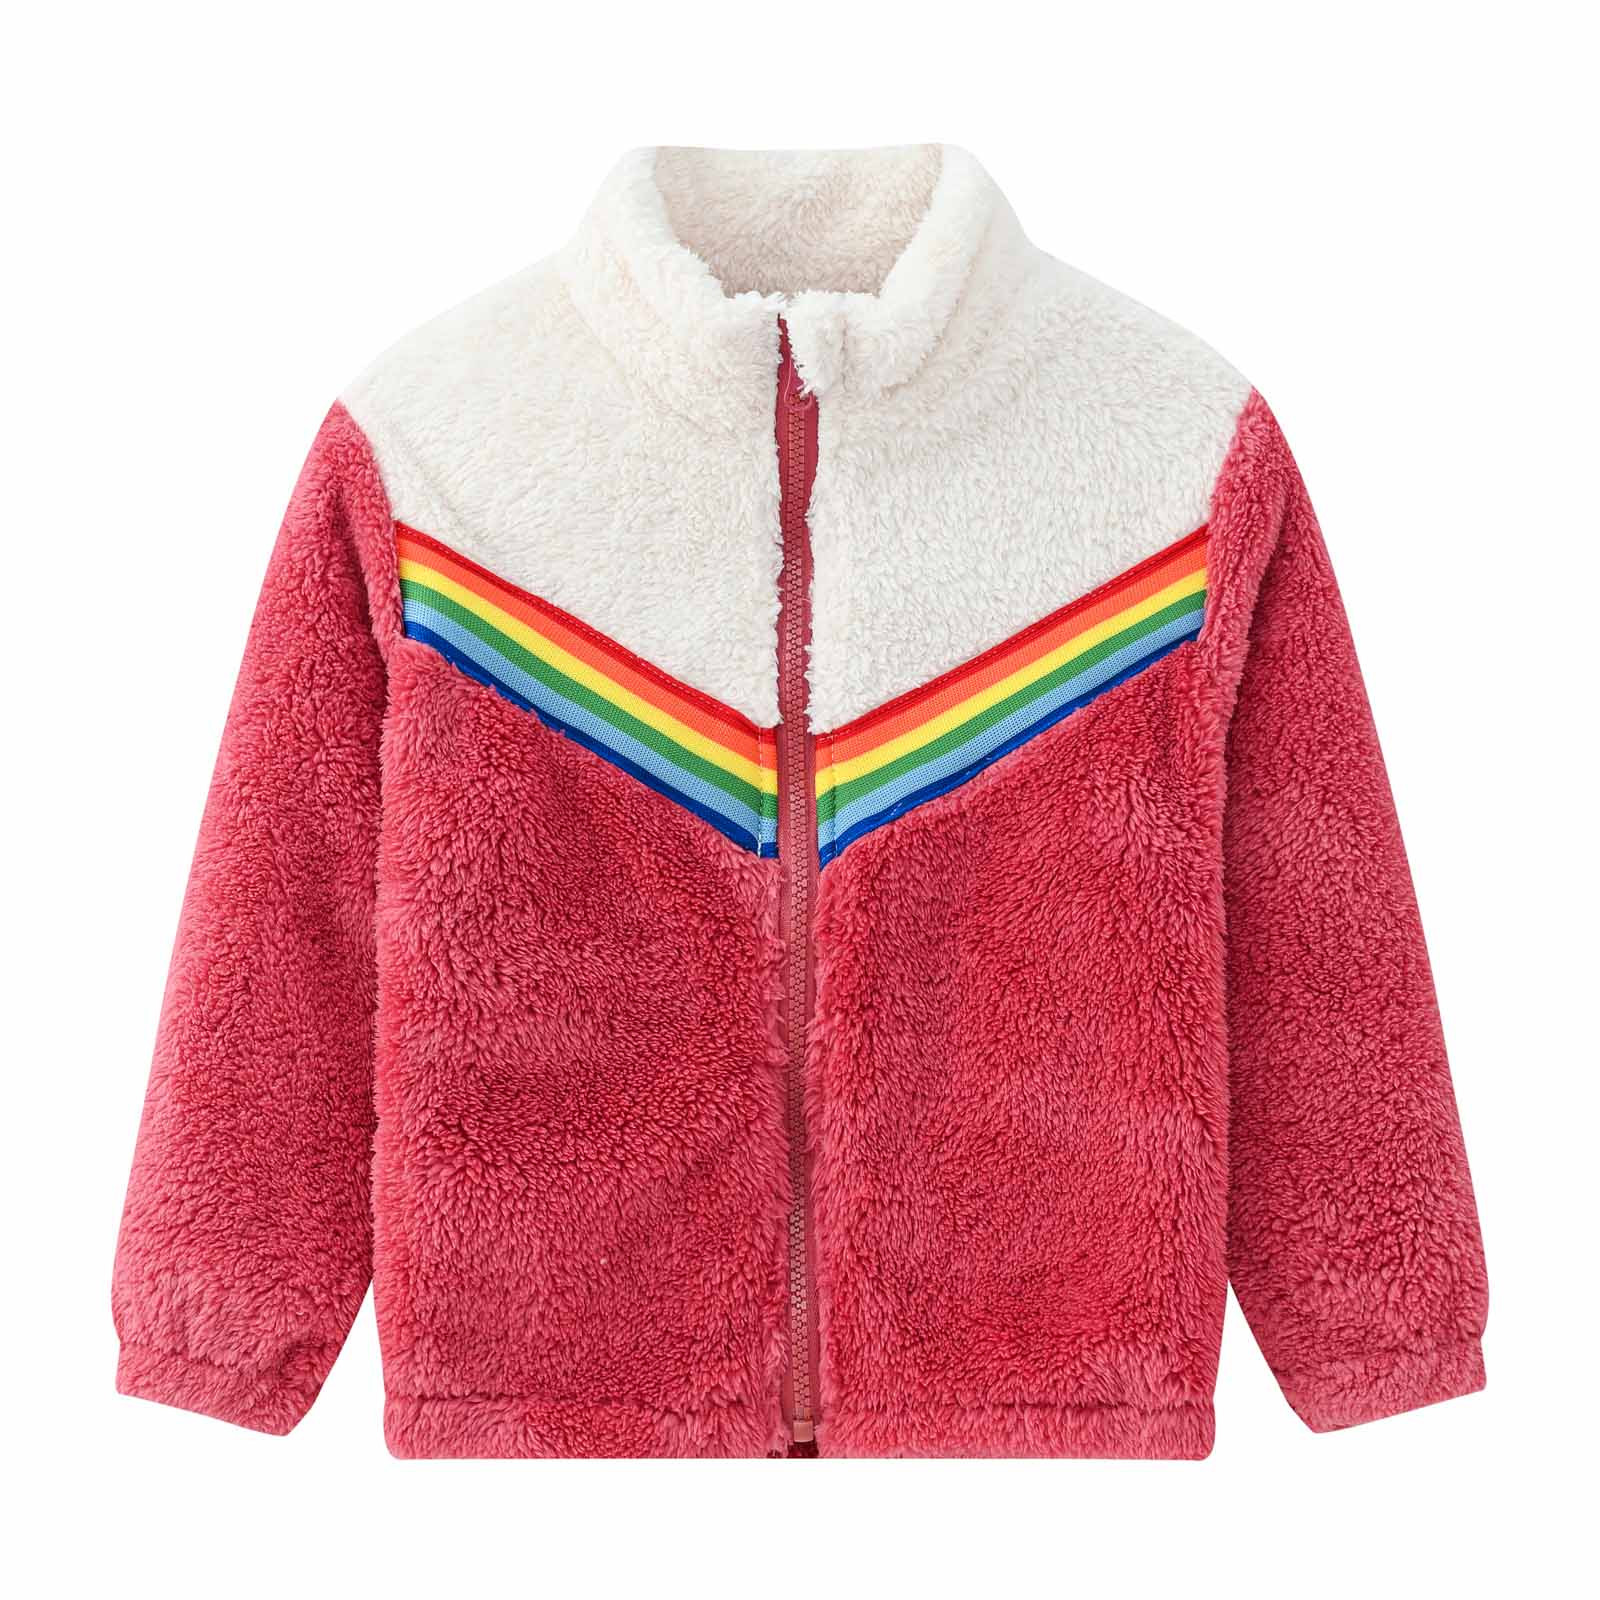 YYDGH Girls Zipper Jacket Fuzzy Sweatshirt Long Sleeve Casual Cozy Fleece Sherpa Outwear Coat Full-Zip Rainbow Jackets(Red,2-3 Years) - image 1 of 8